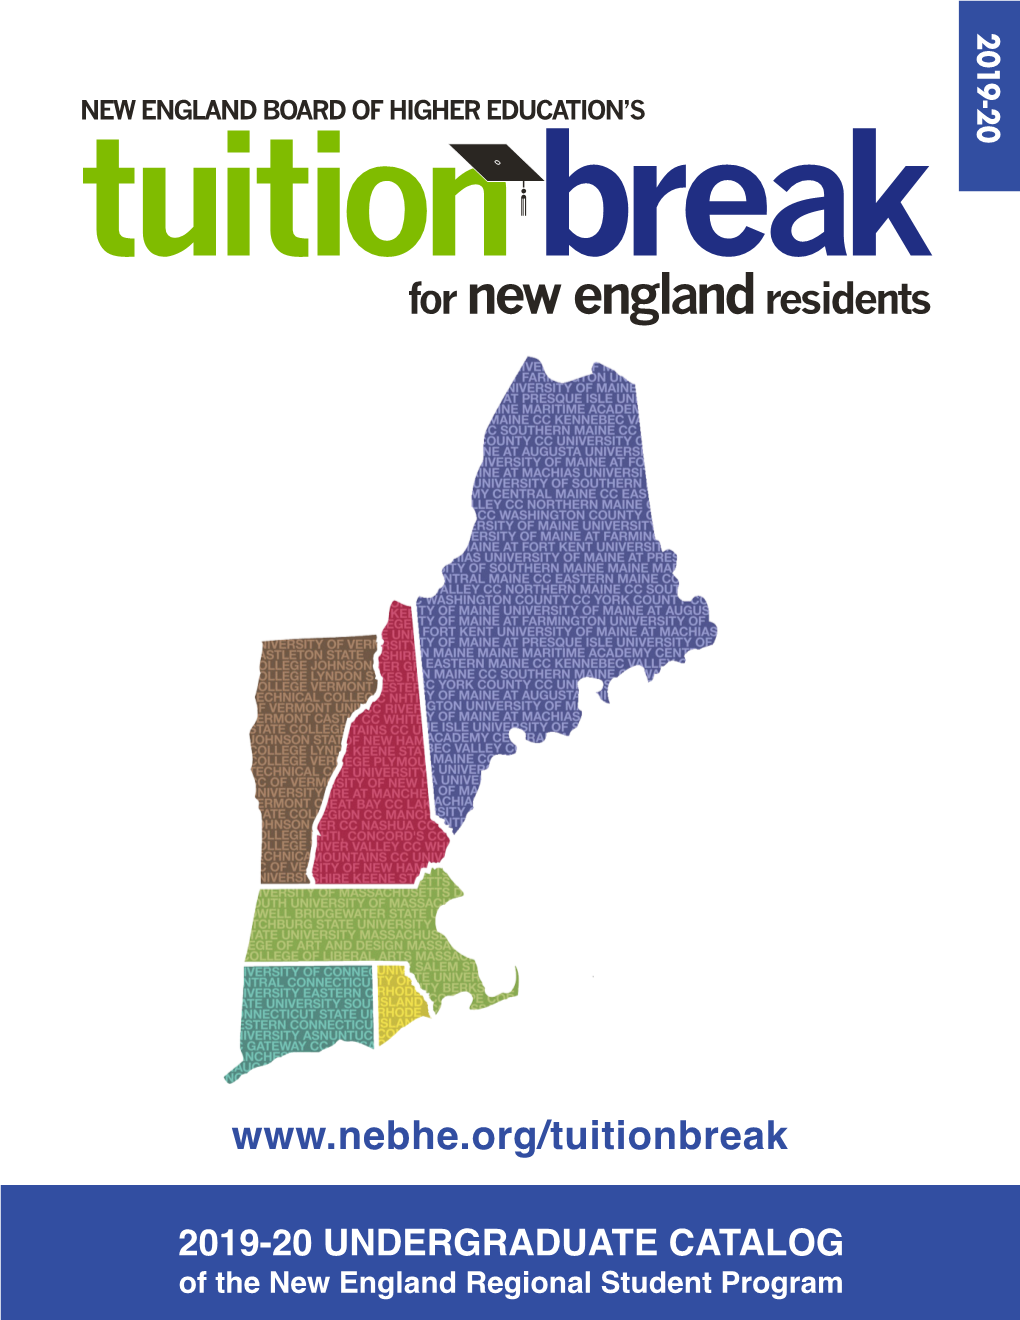 The Tuition Break Catalog